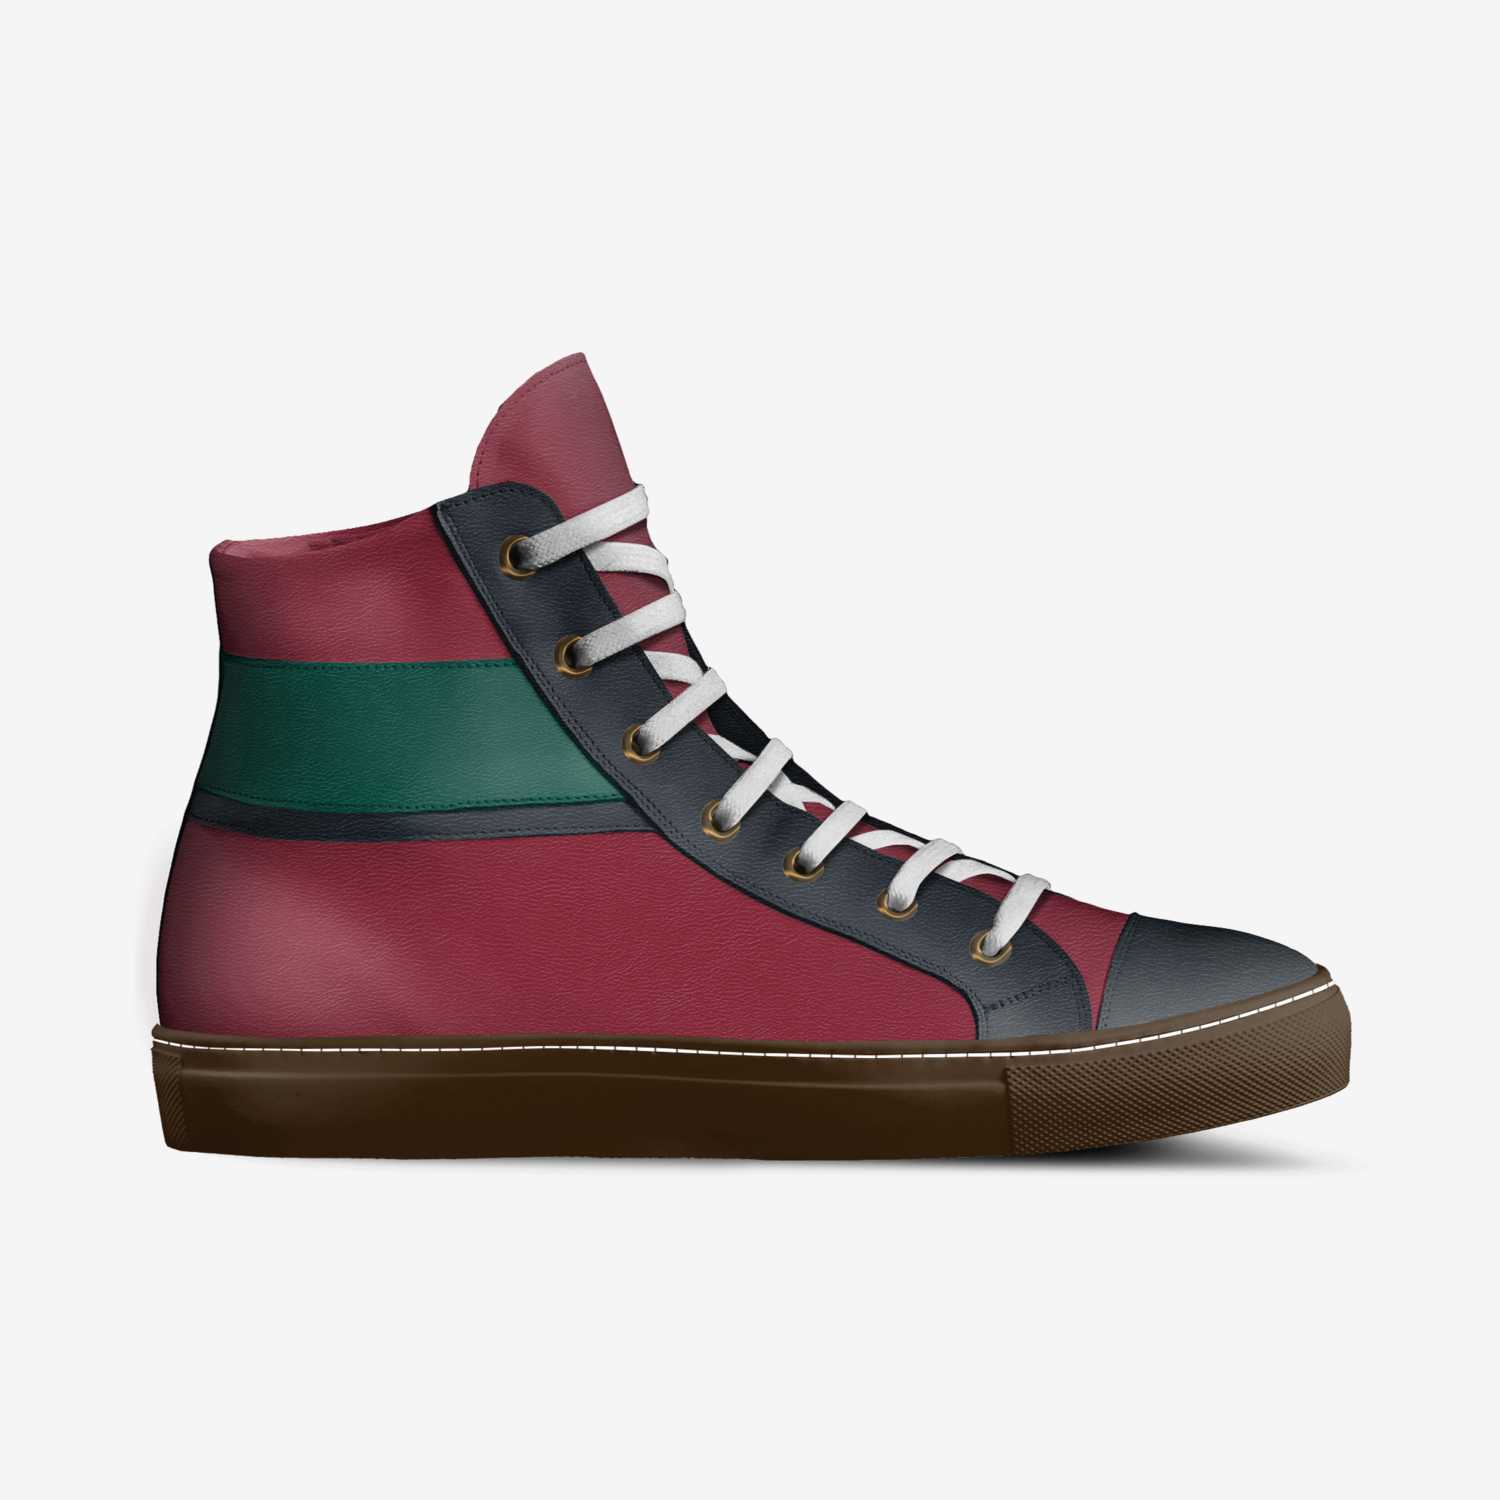 goerge aragonias custom made in Italy shoes by Kesha Galiardi | Side view